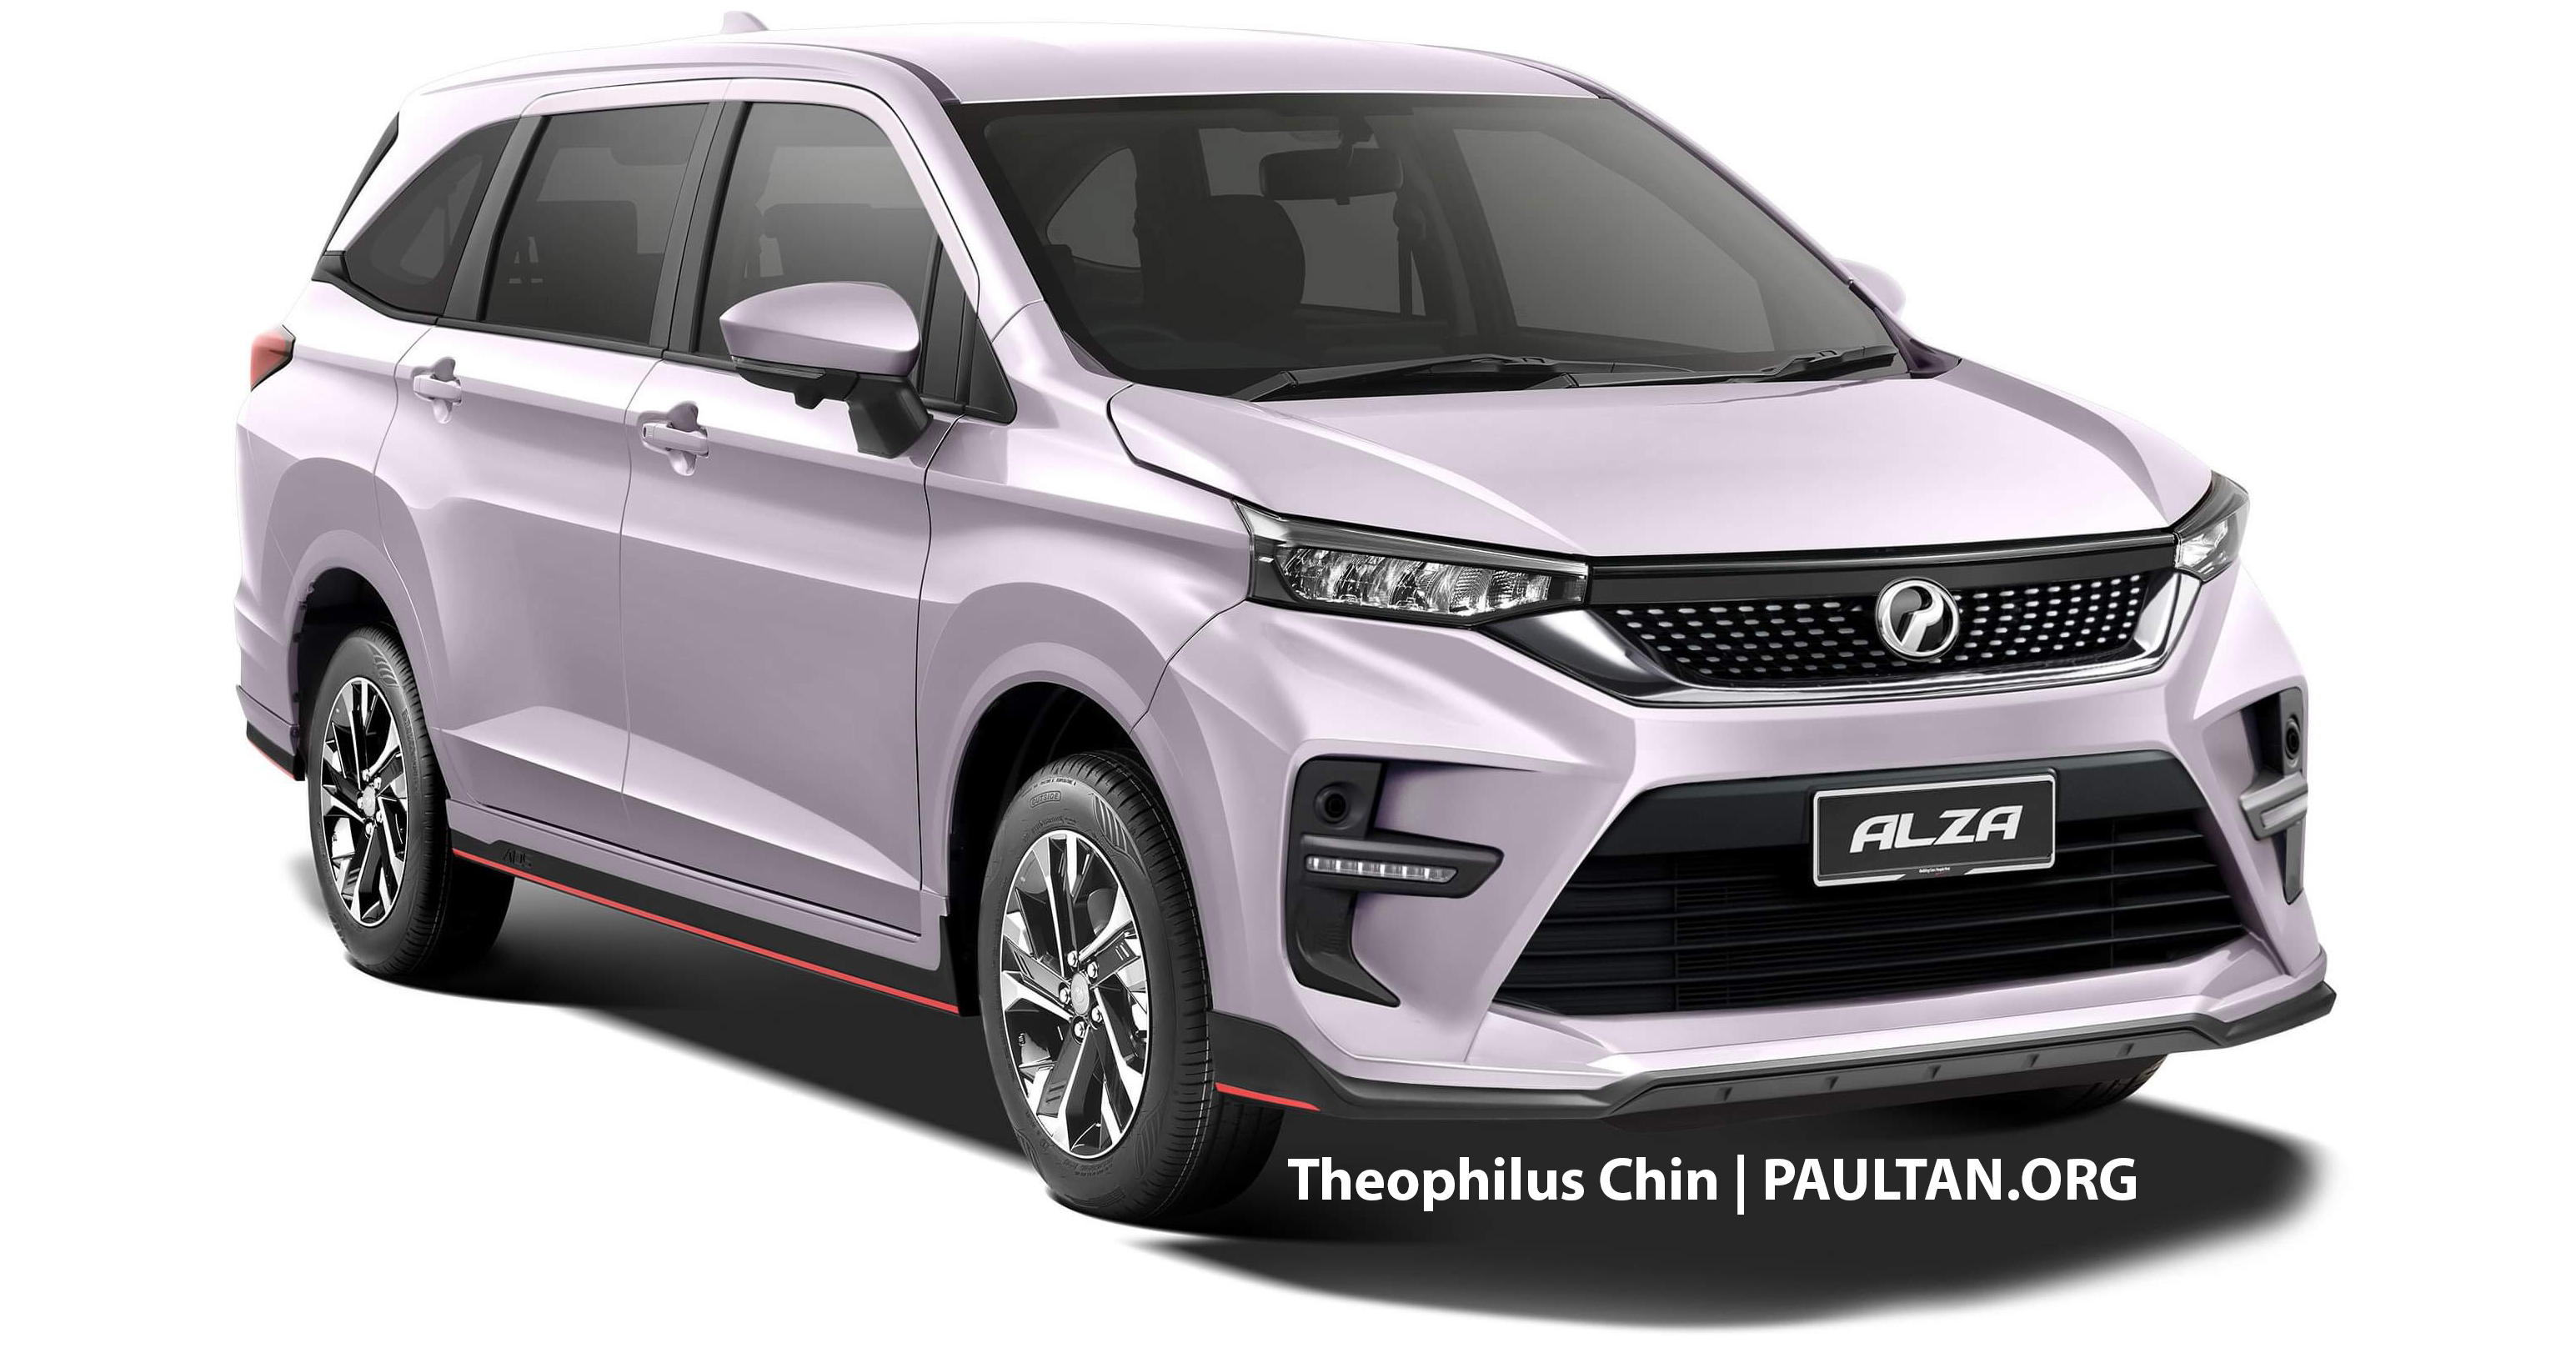 Perodua Alza D27A render 3 feature  Paul Tan's Automotive News